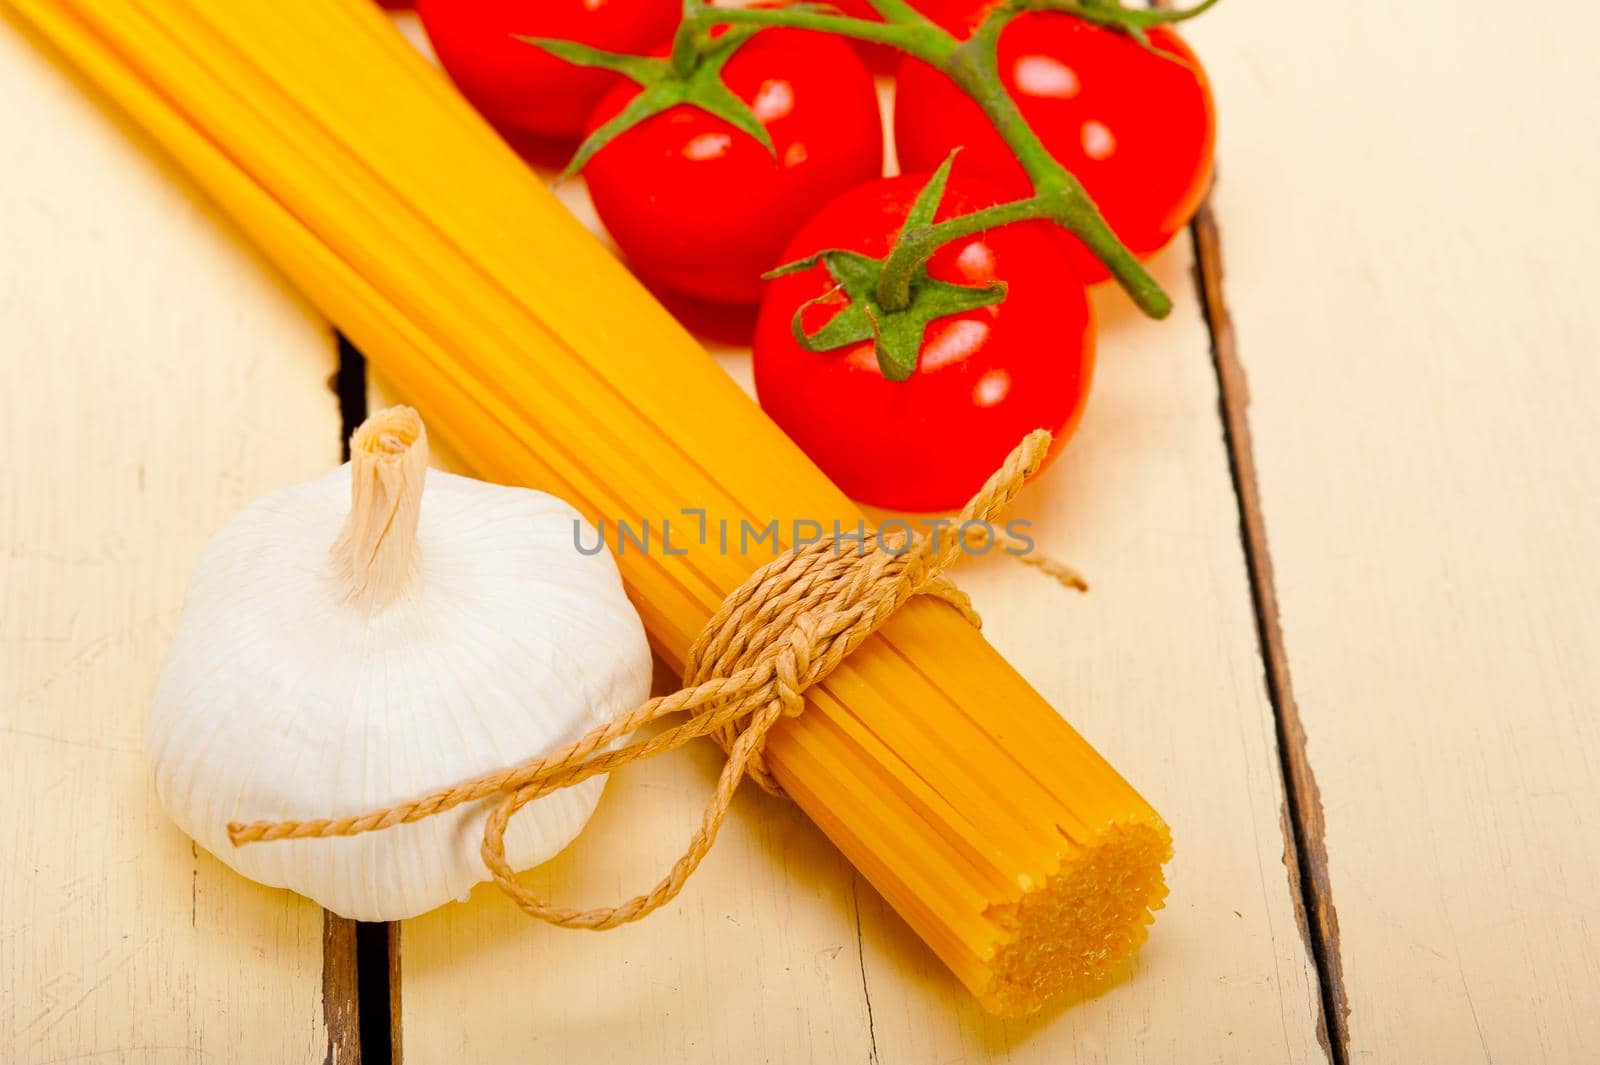 Italian basic pasta ingredients by keko64